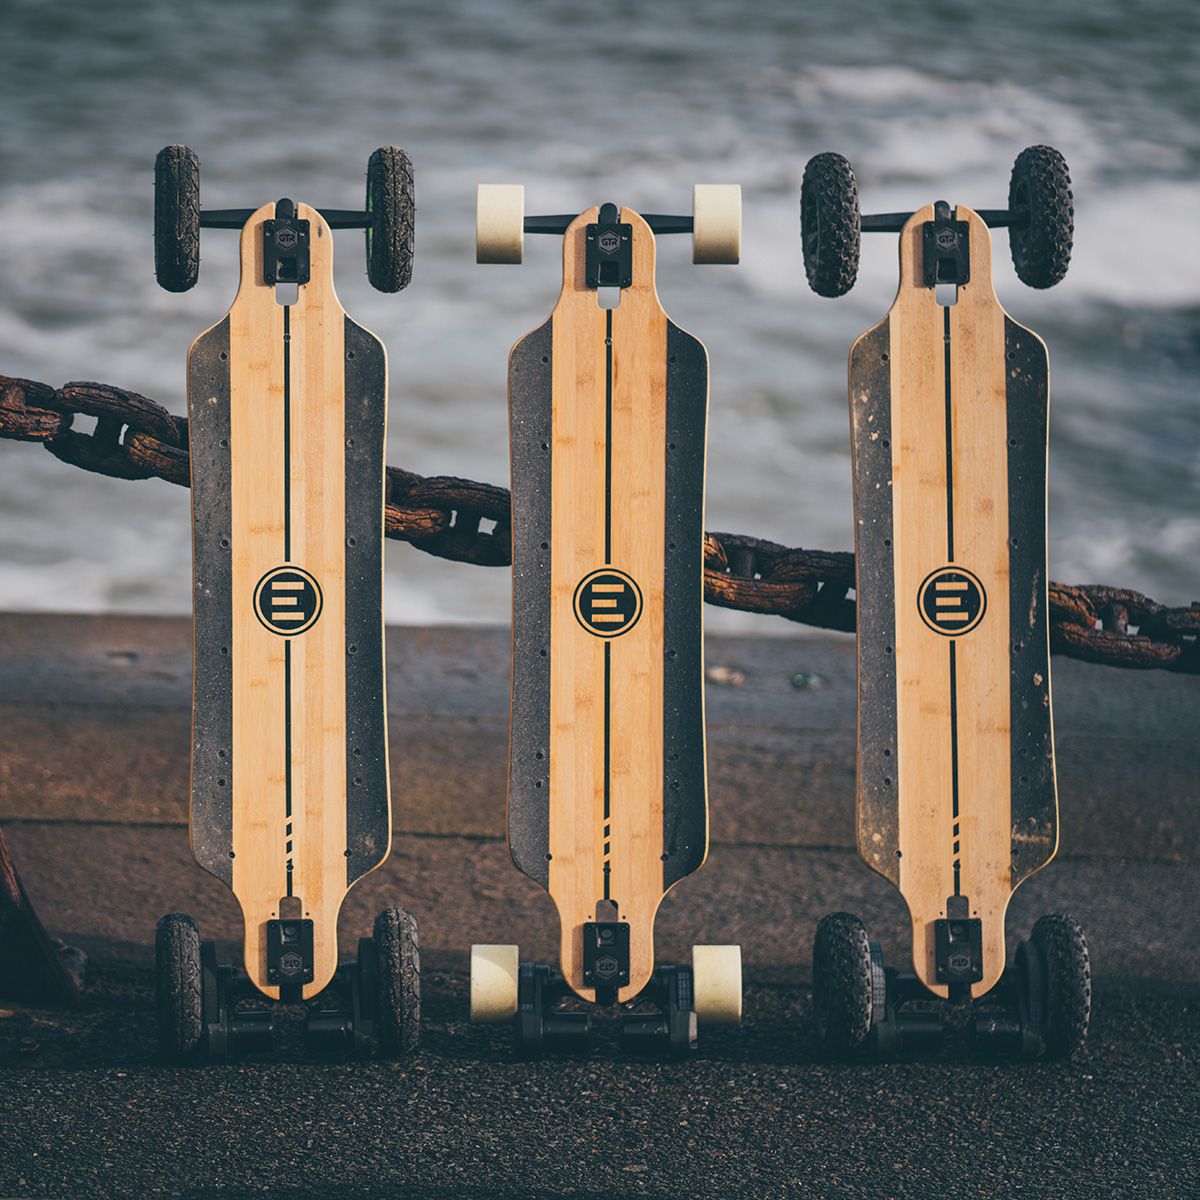 Three Evolve electric skateboards